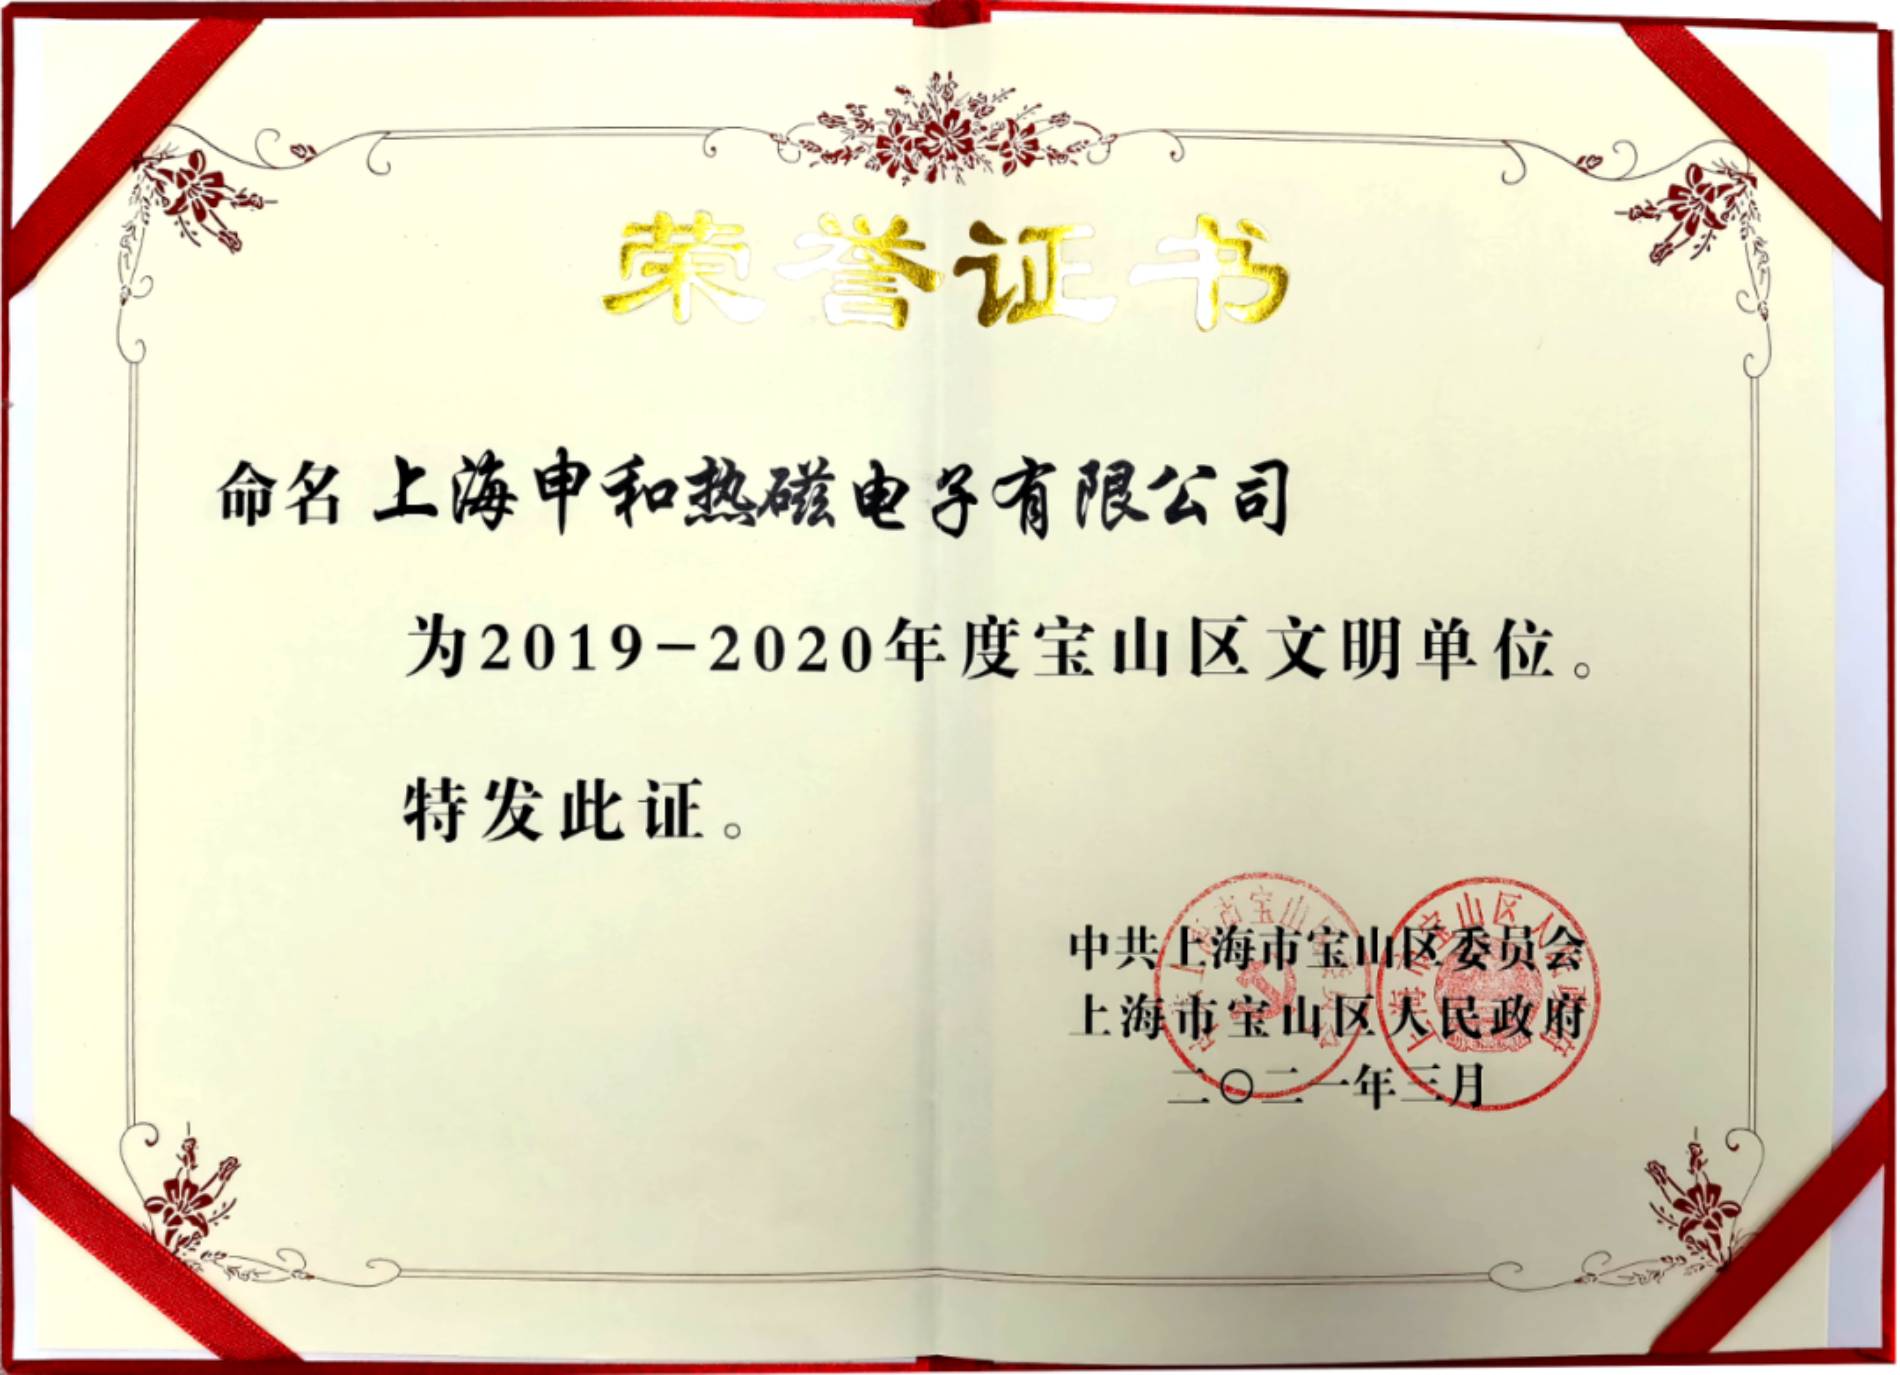 Shanghai Shenhe Thermo-Magnetics Electronics Co.,Ltd. won the honor of Baoshan civilized unit in 2019-2020